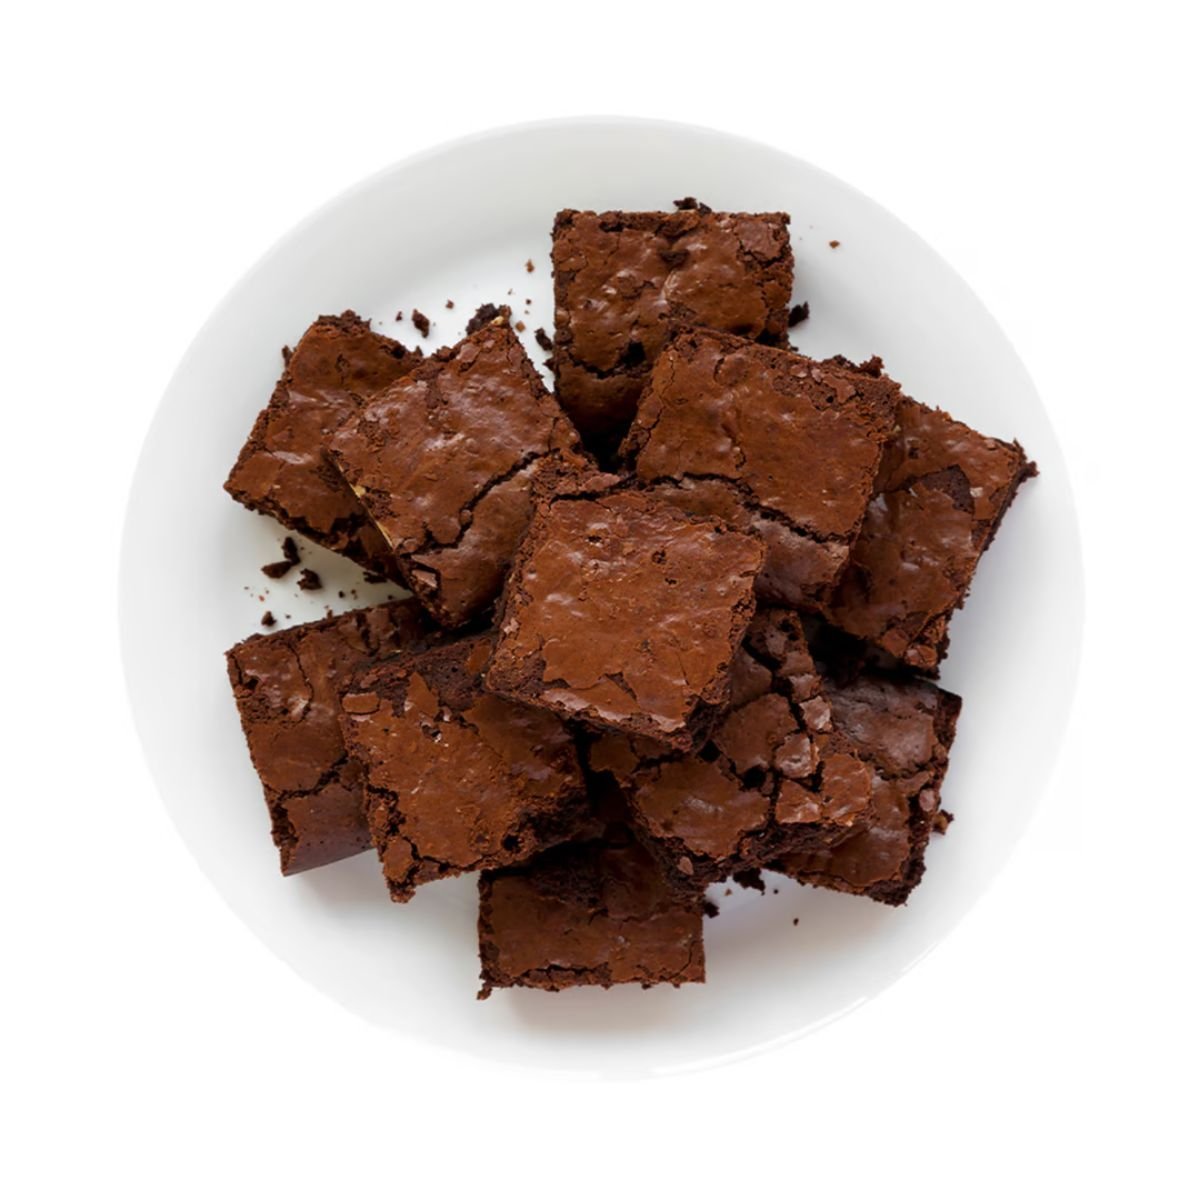 Nutrend Qwizz Protein Bar 60g - čokoládové koláčiky